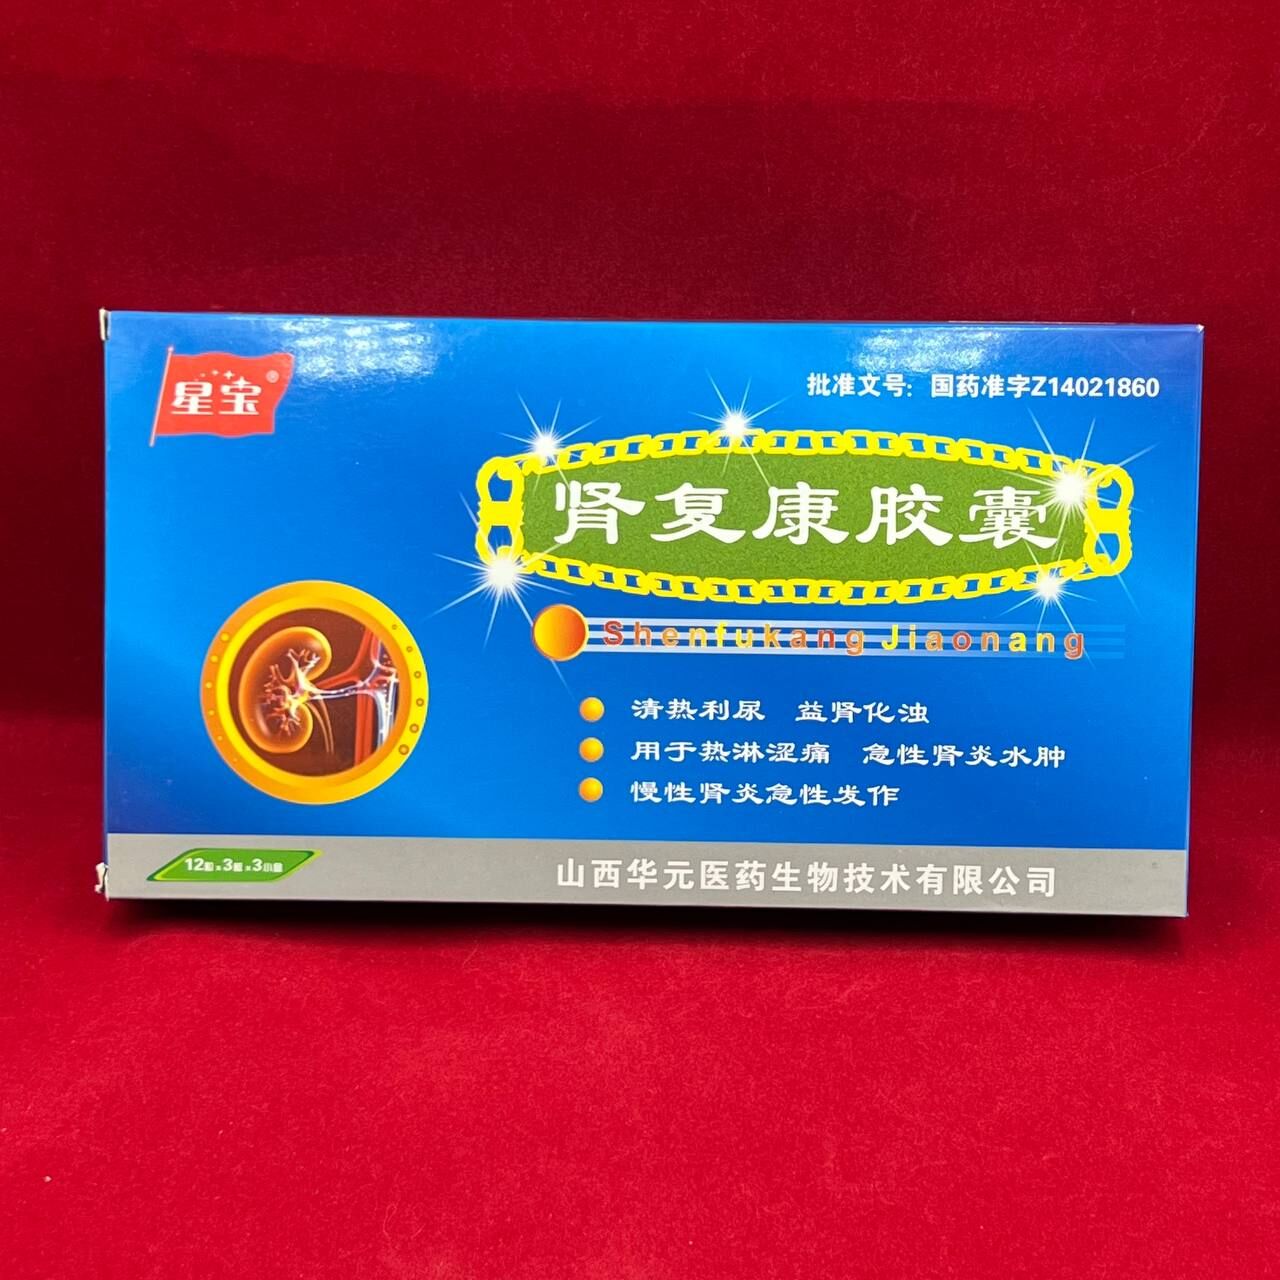 БАД Мочегонный препарат "Шэньфукан" (Shenfukang Jiaonang) от нефрита